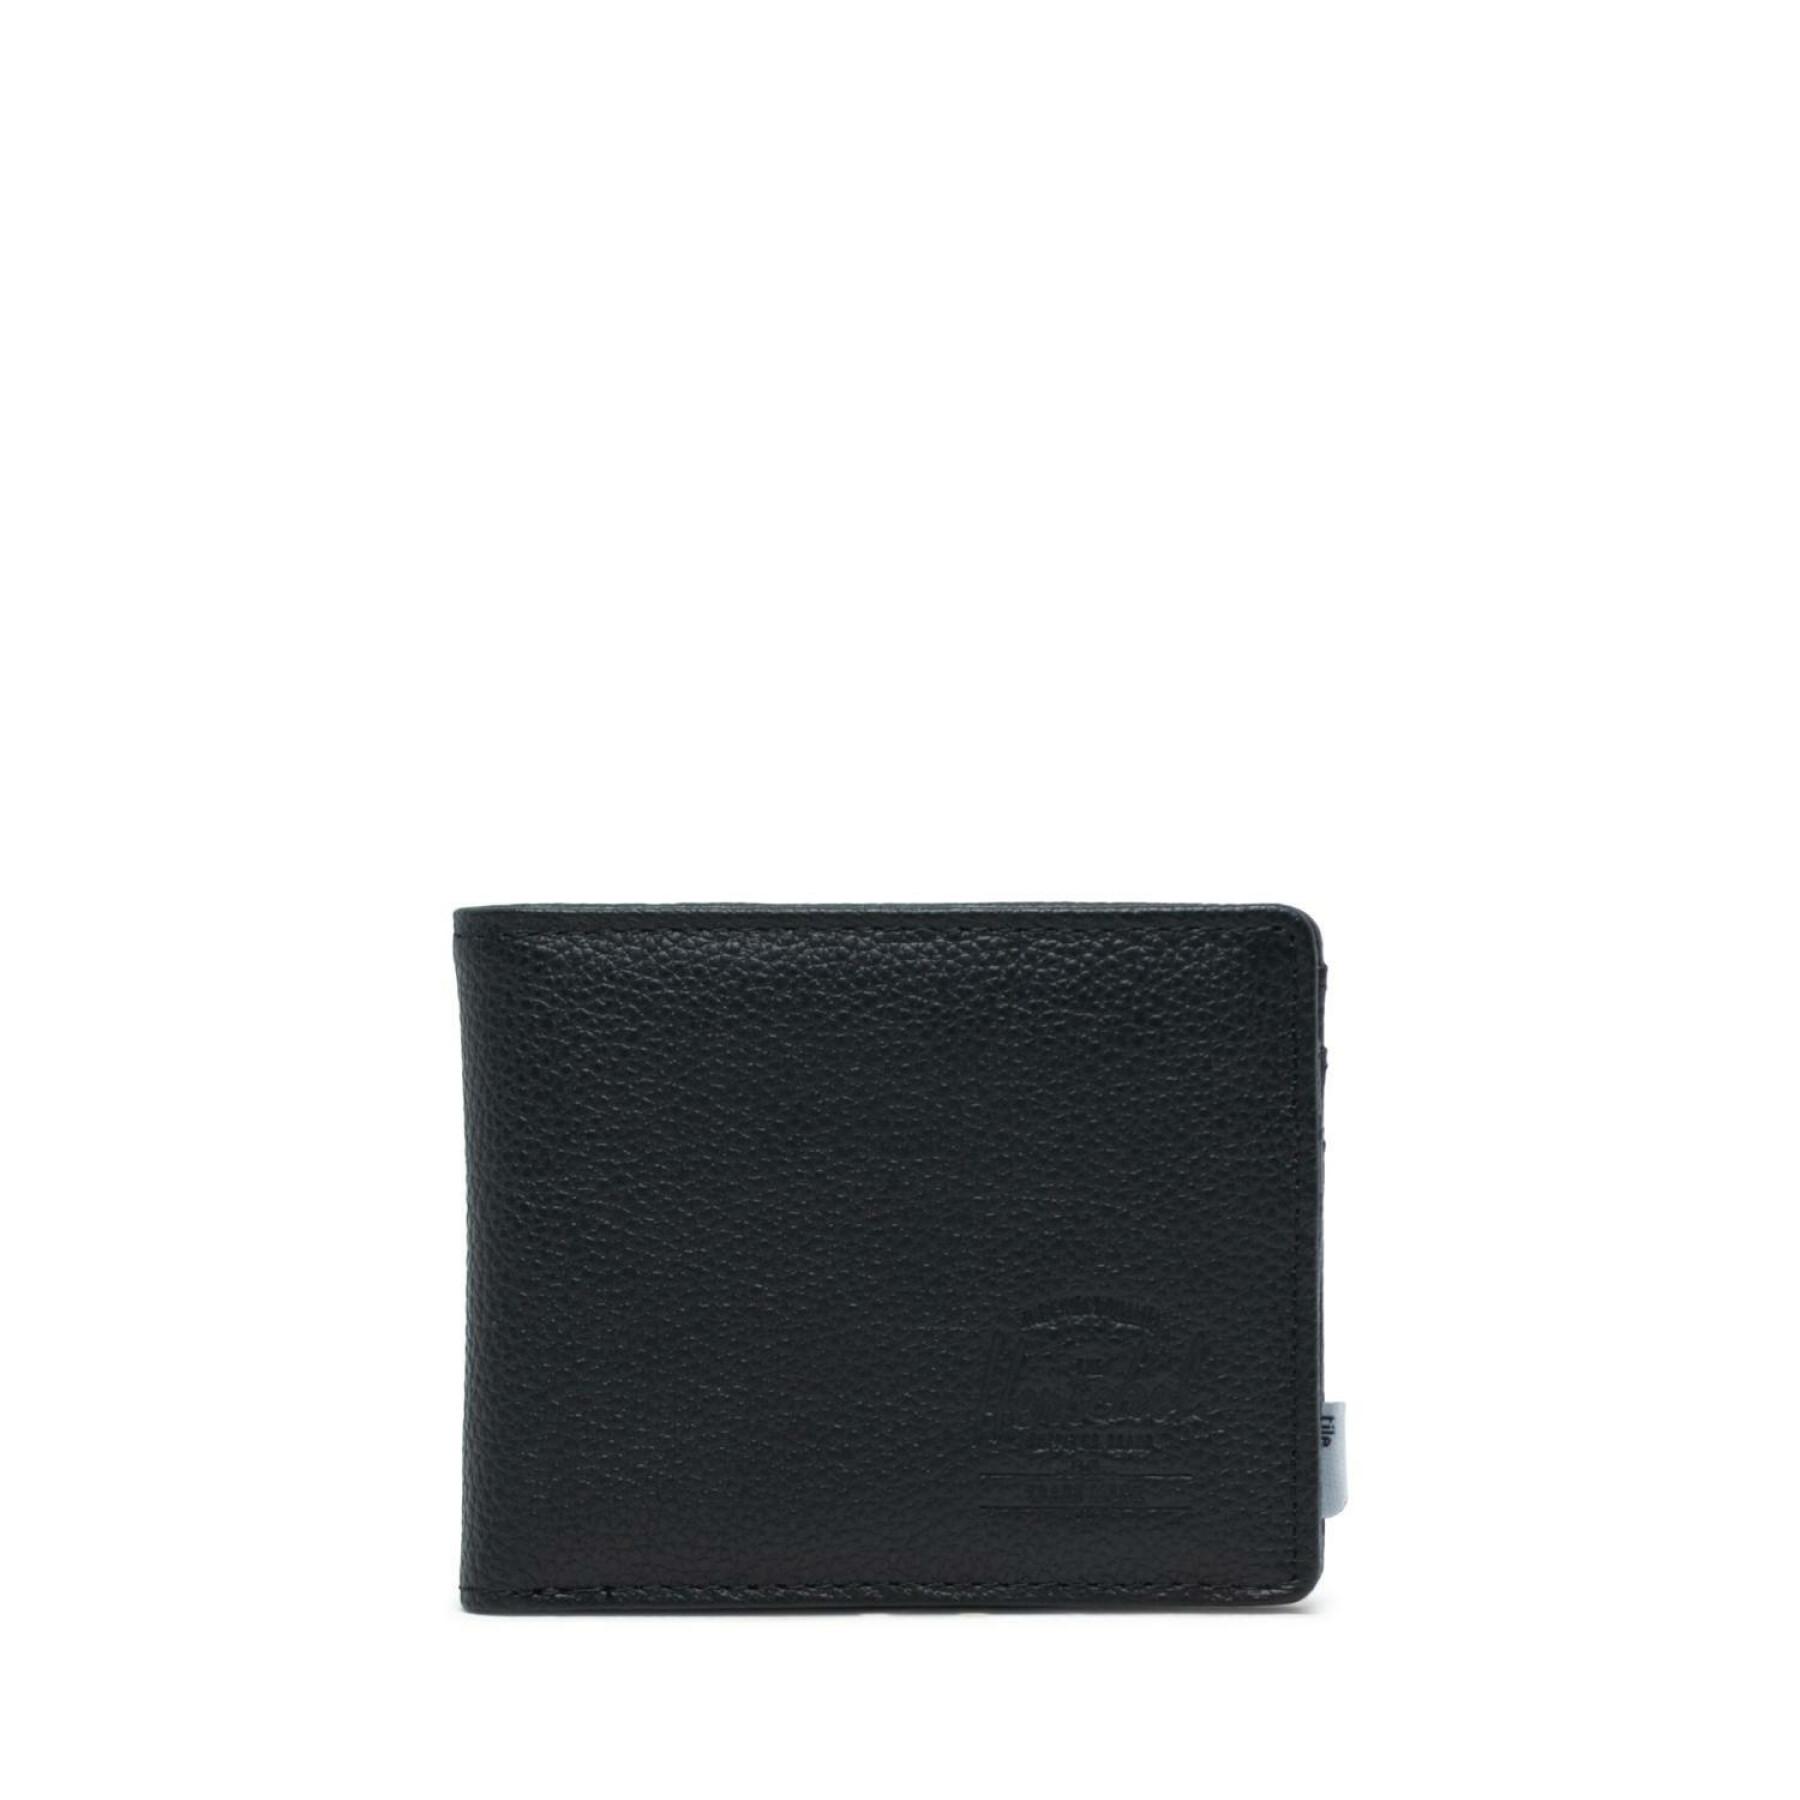 Portfölj Herschel black pebbled leather